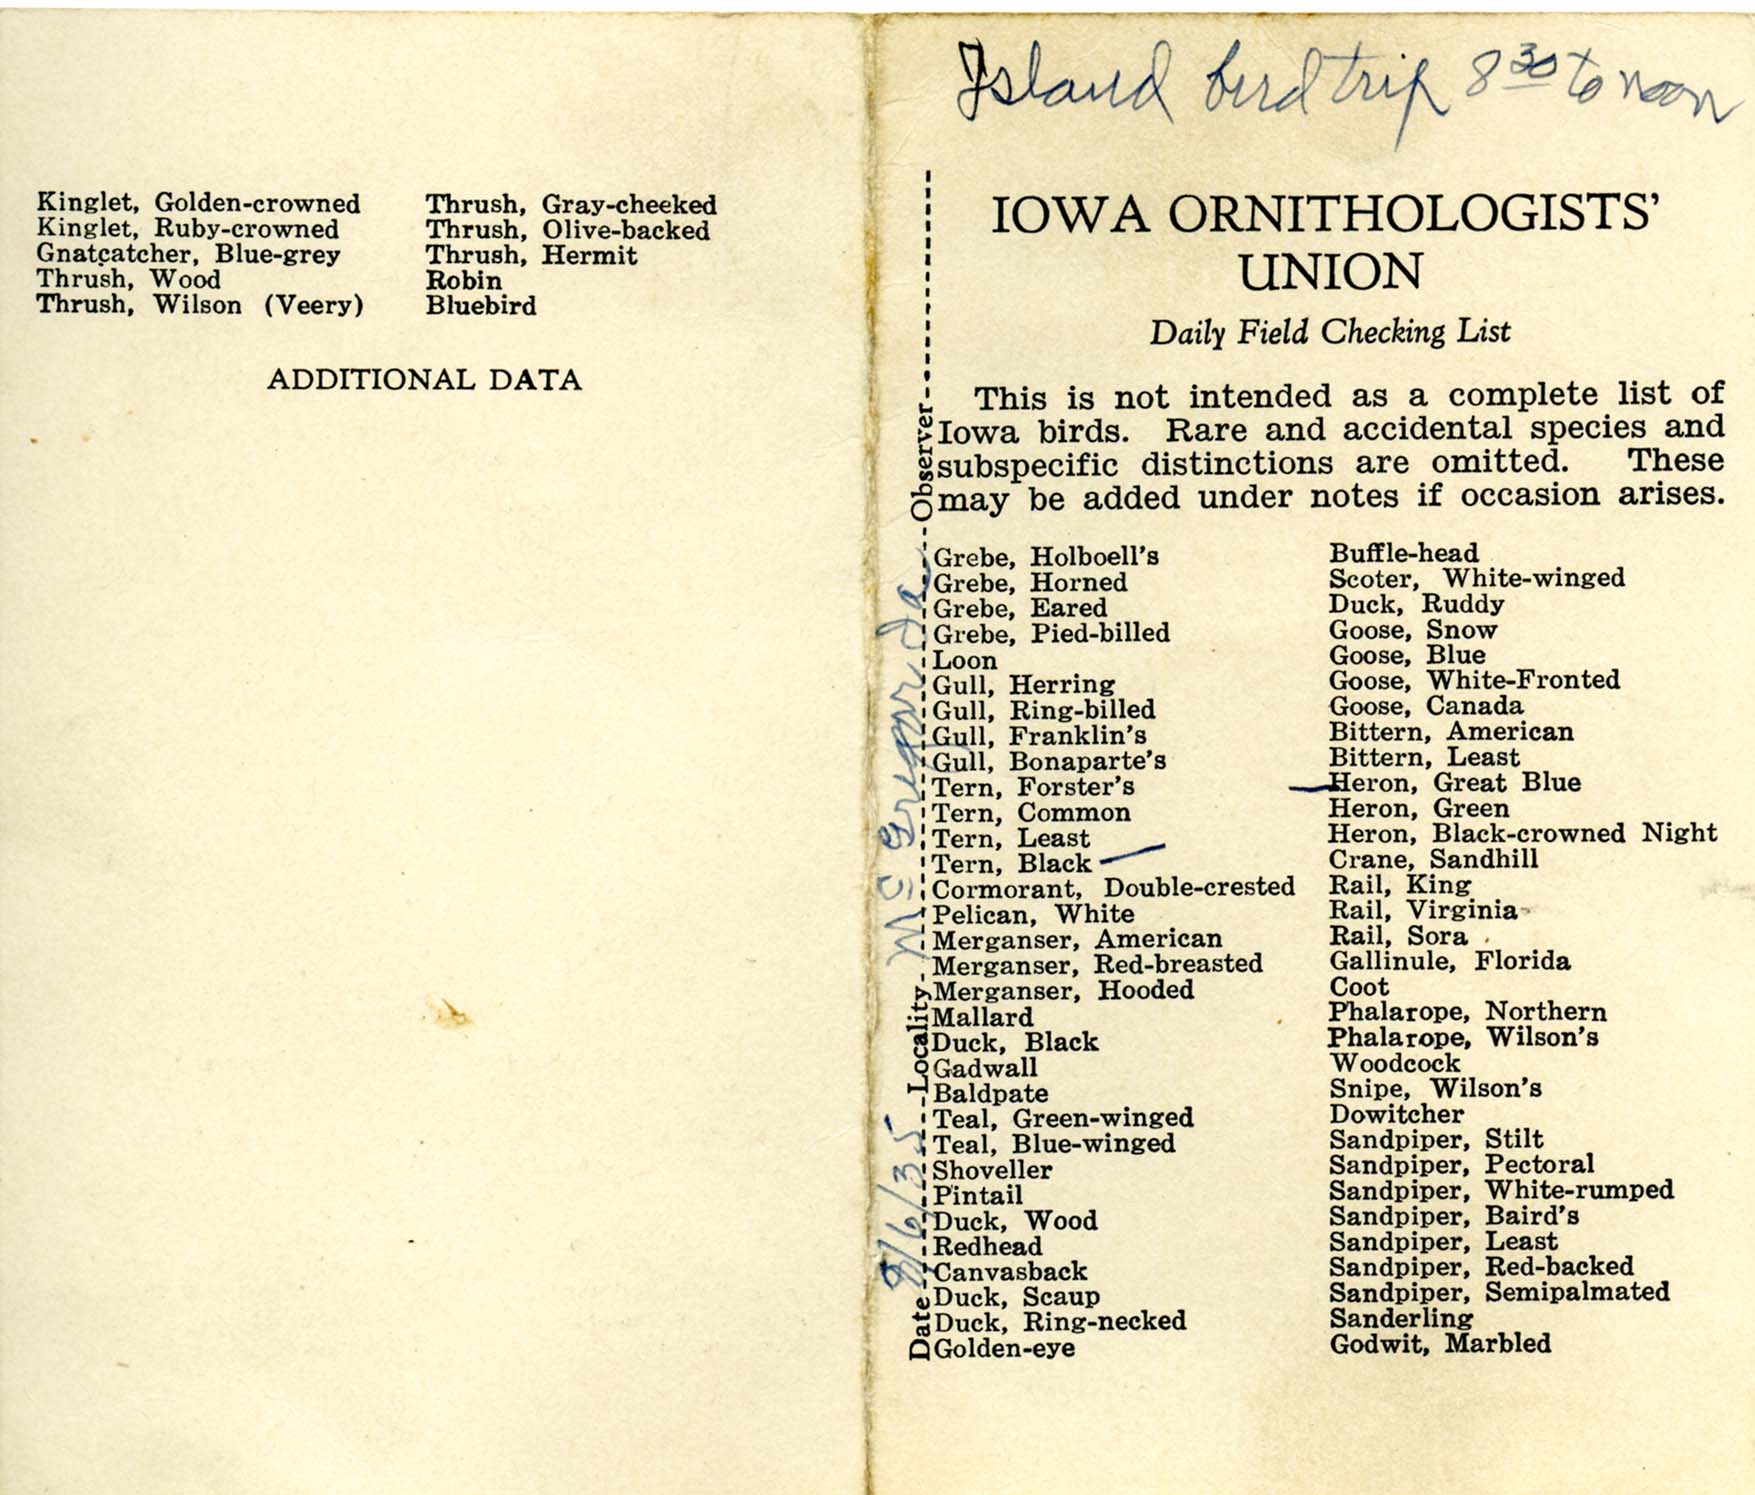 Daily field checking list, Walter Rosene, August 6, 1935